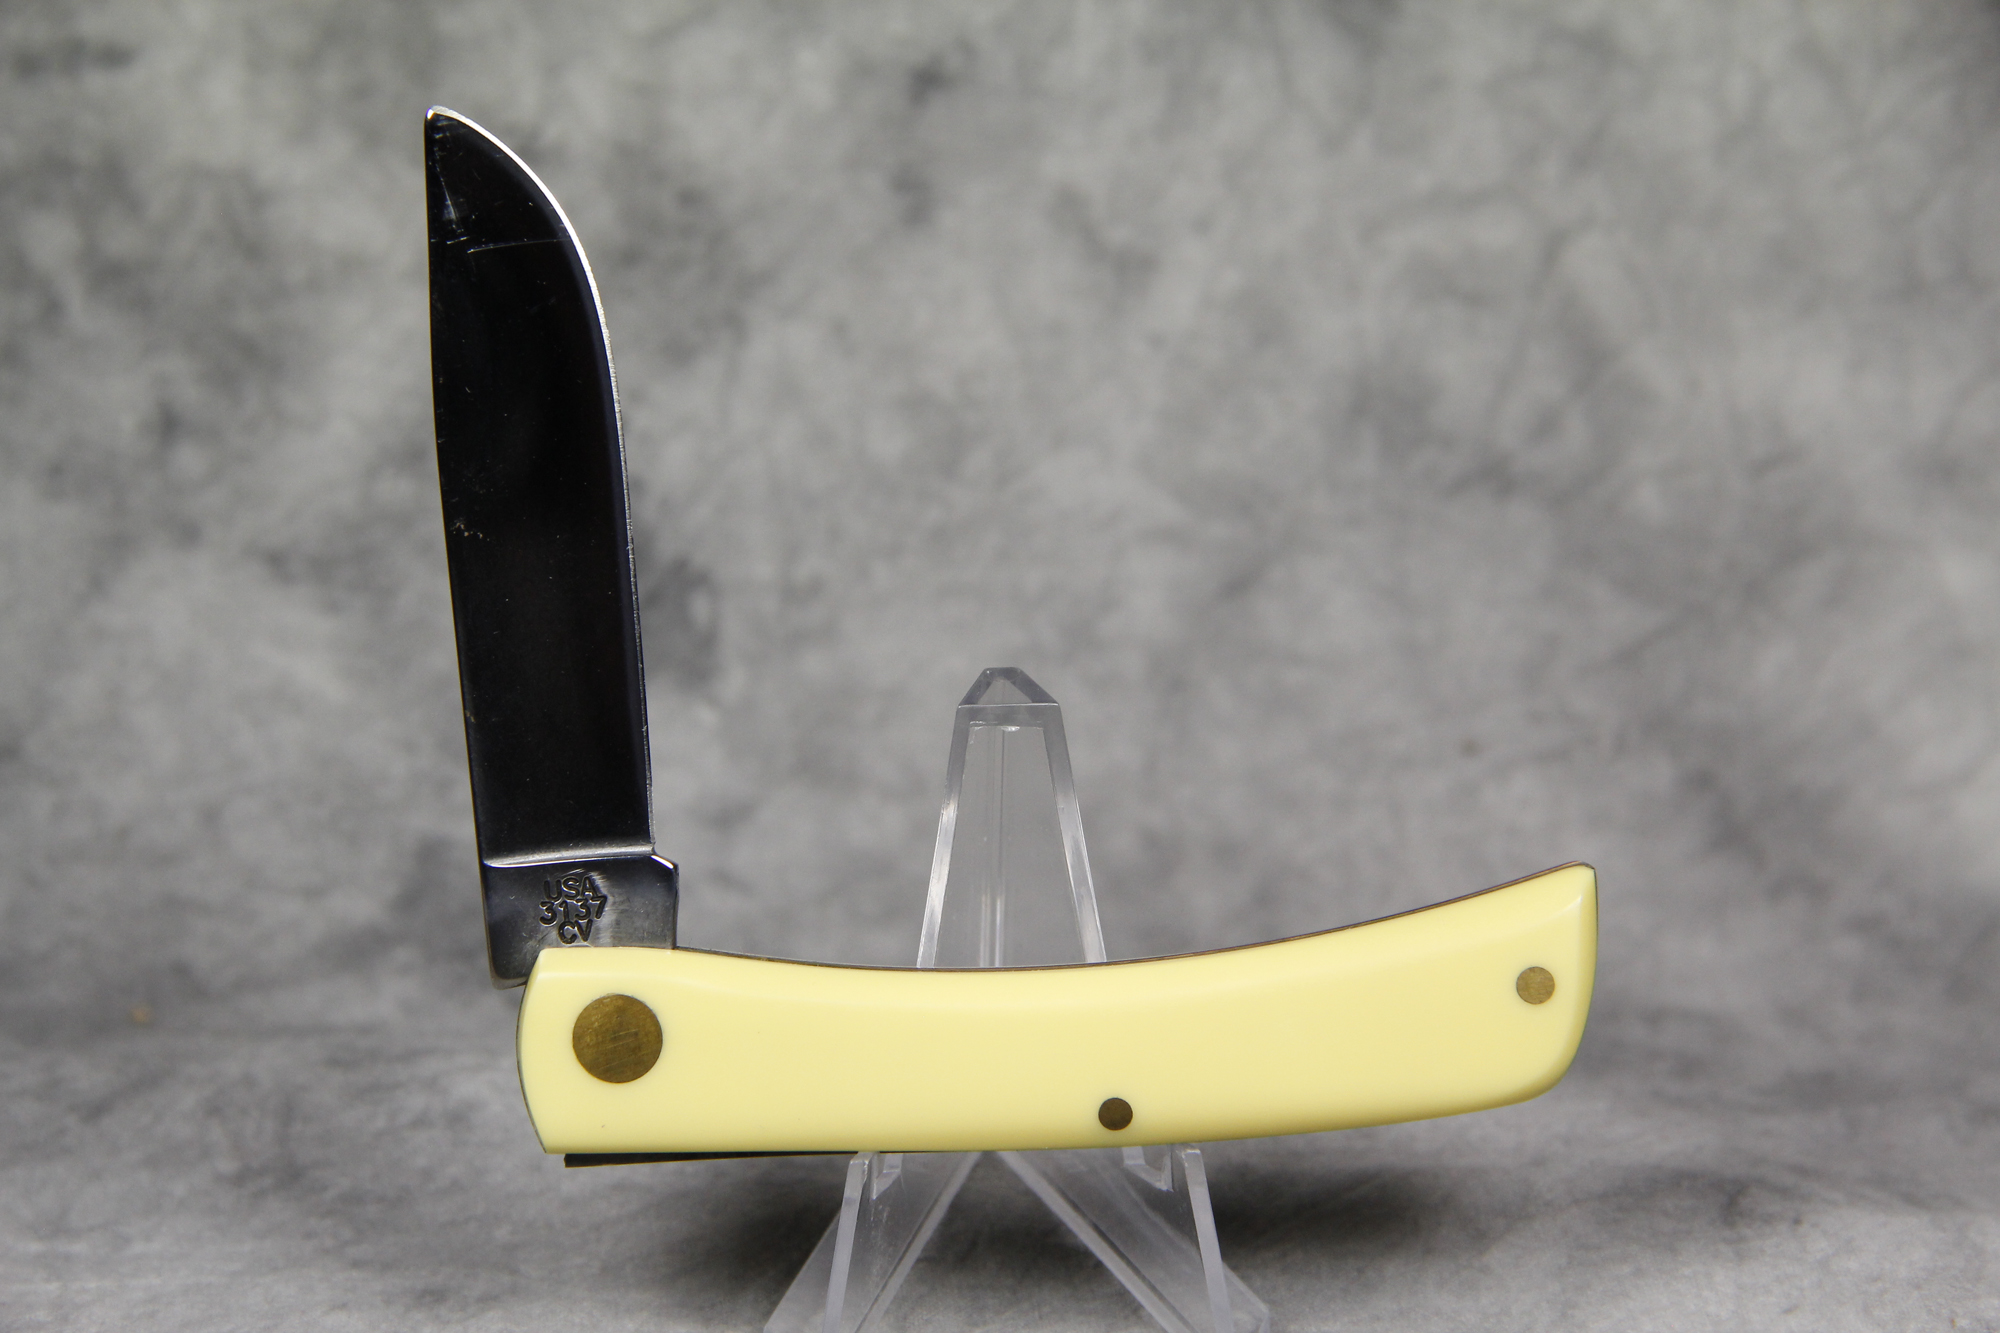 2001 case xx 3137 cv yellow composite sod buster jr  pocket knife mint in box